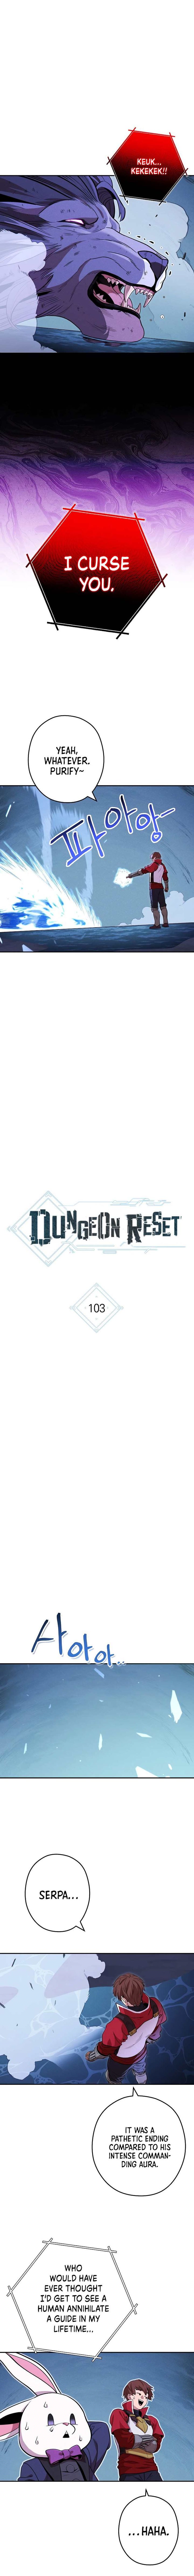 Dungeon Reset 103 7